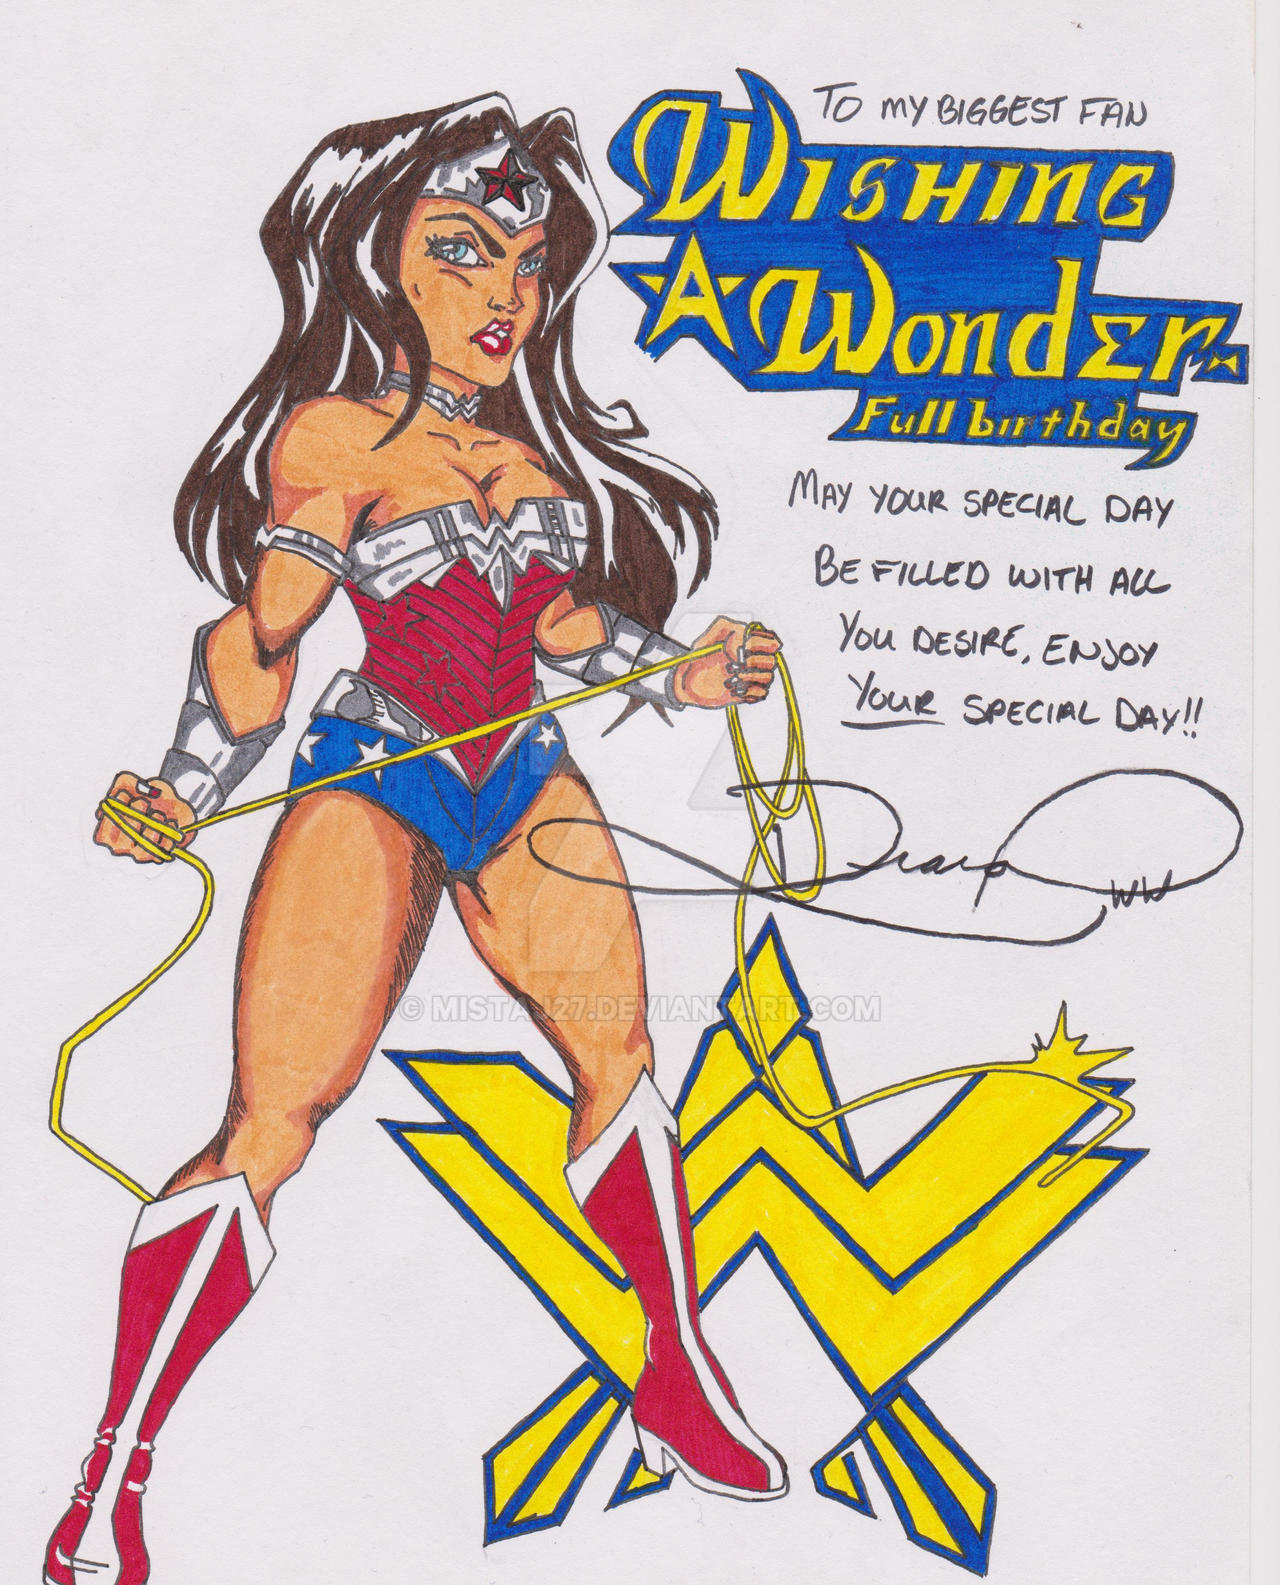 Wonder Woman Birthday Card By Mistaj27 On DeviantArt.